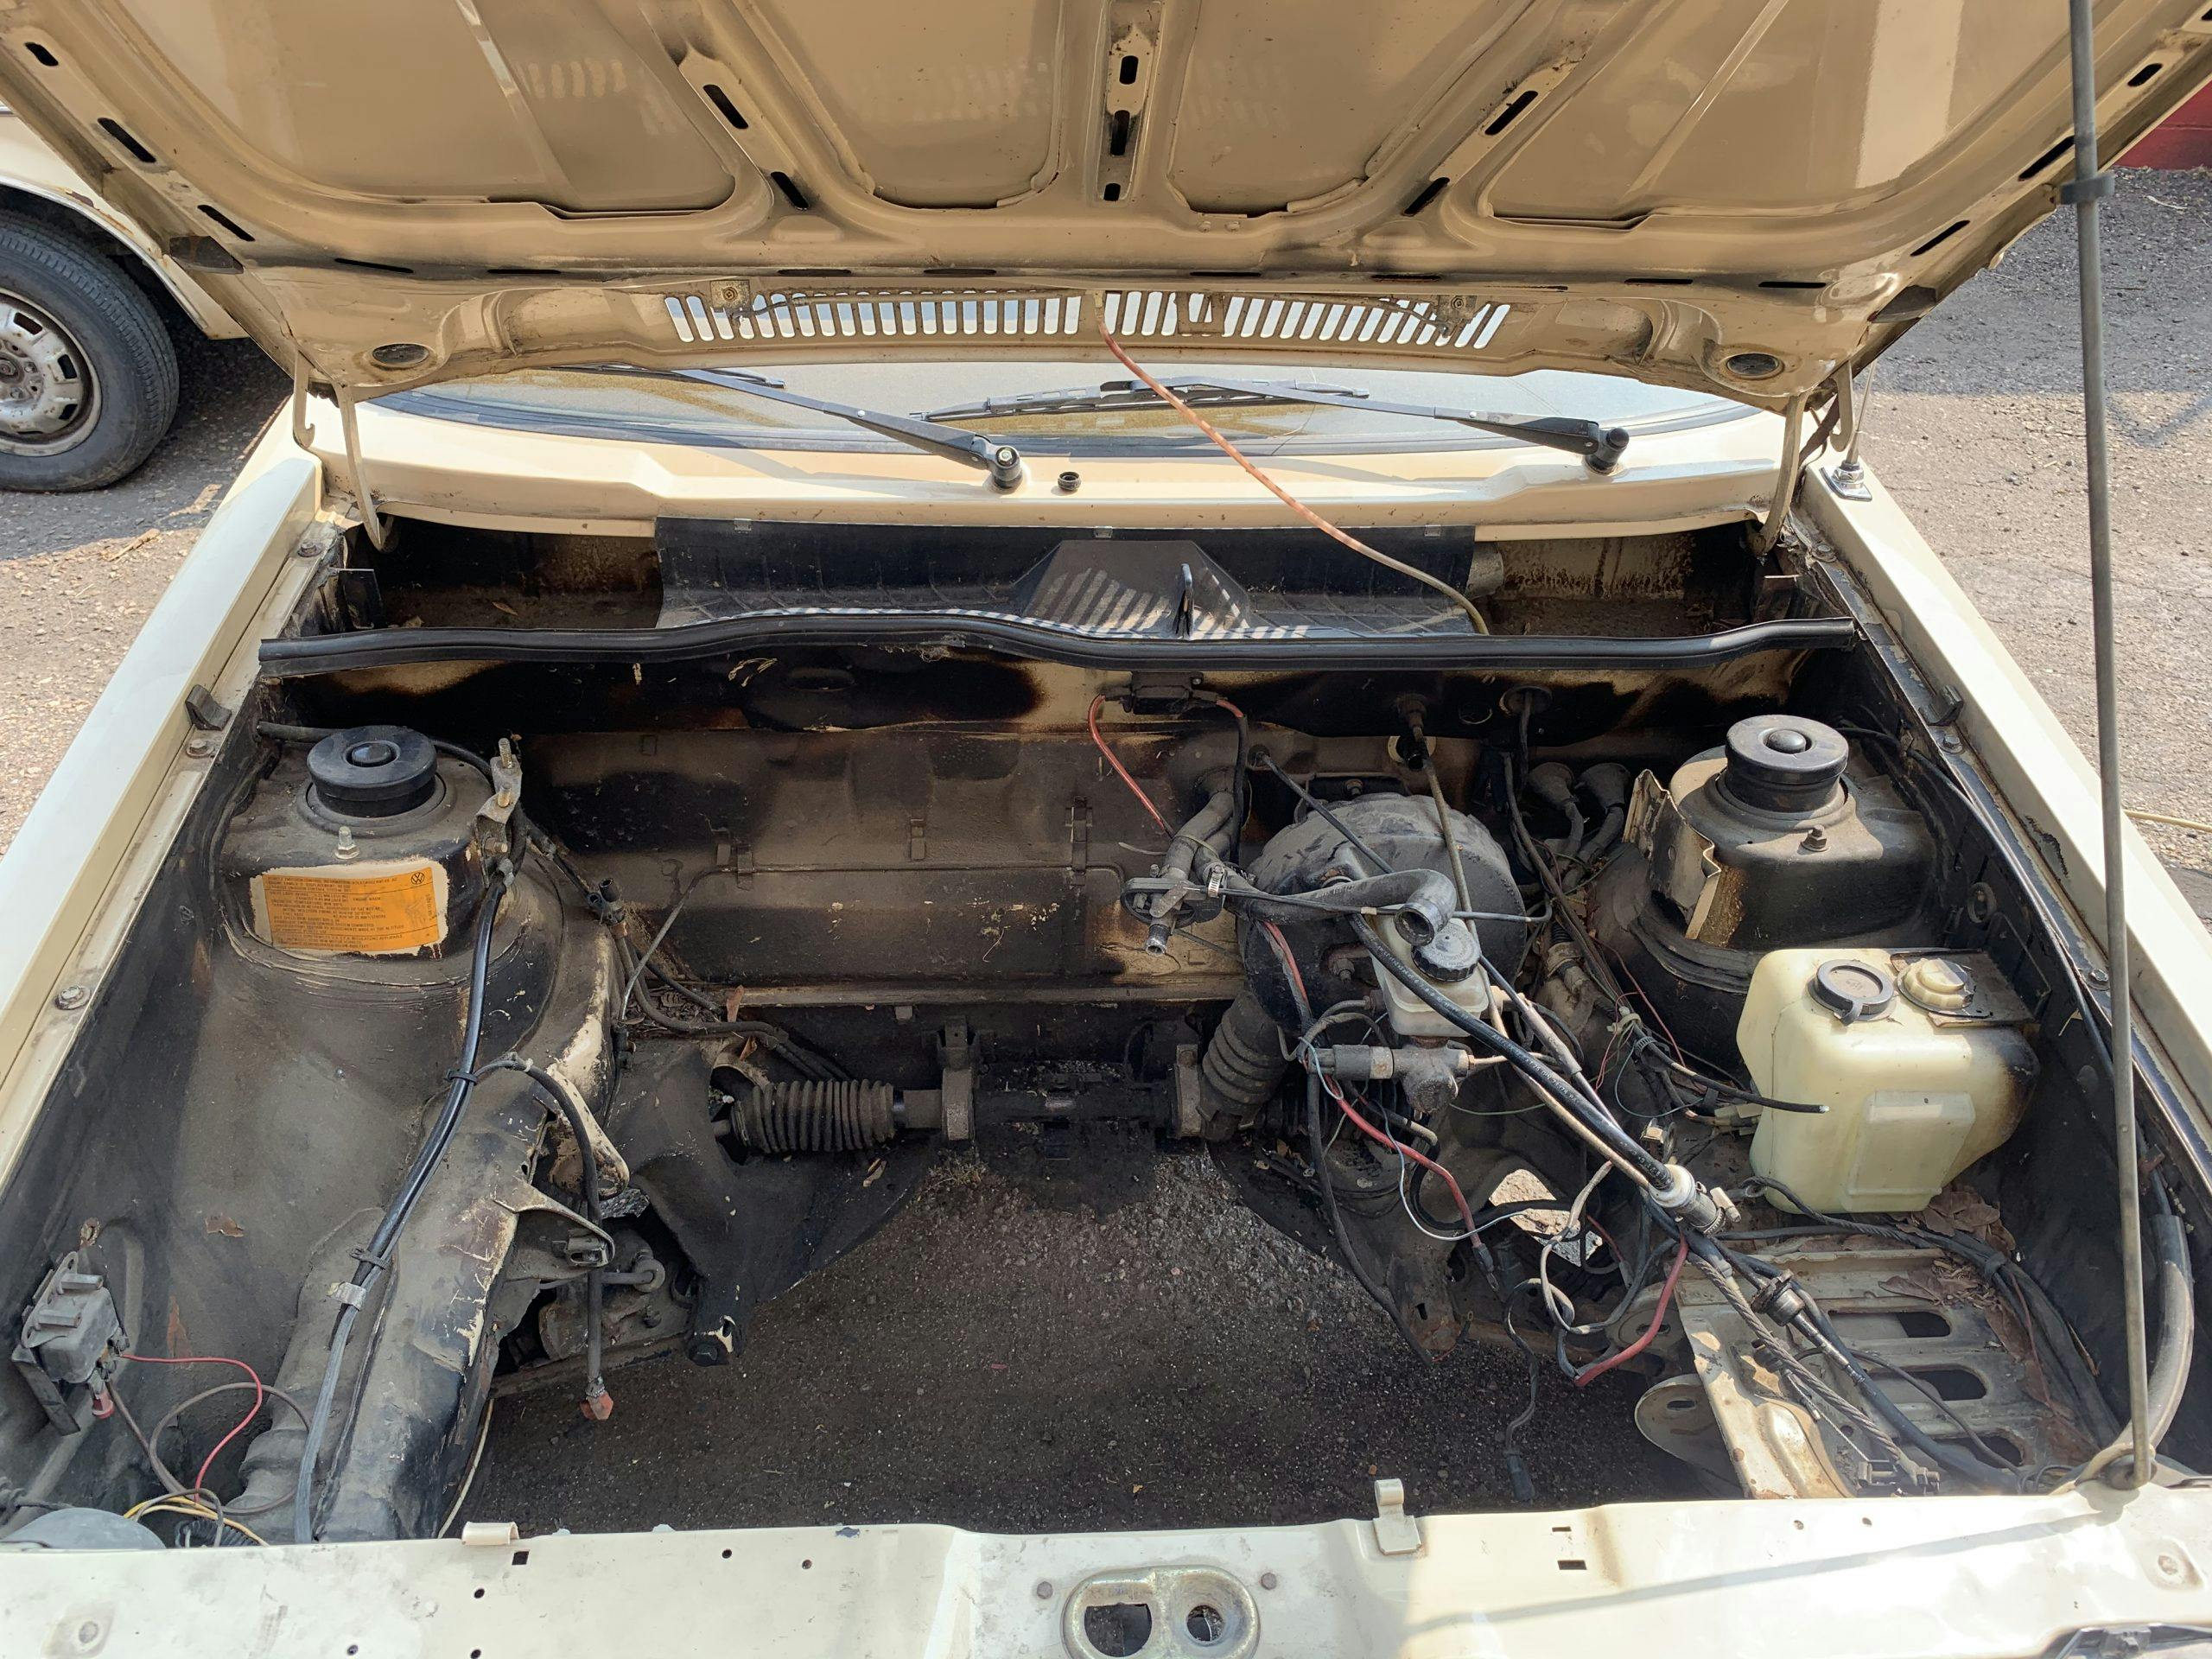 1980 VW Rabbit TDI empty engine bay Aug 22, 3 10 45 PM